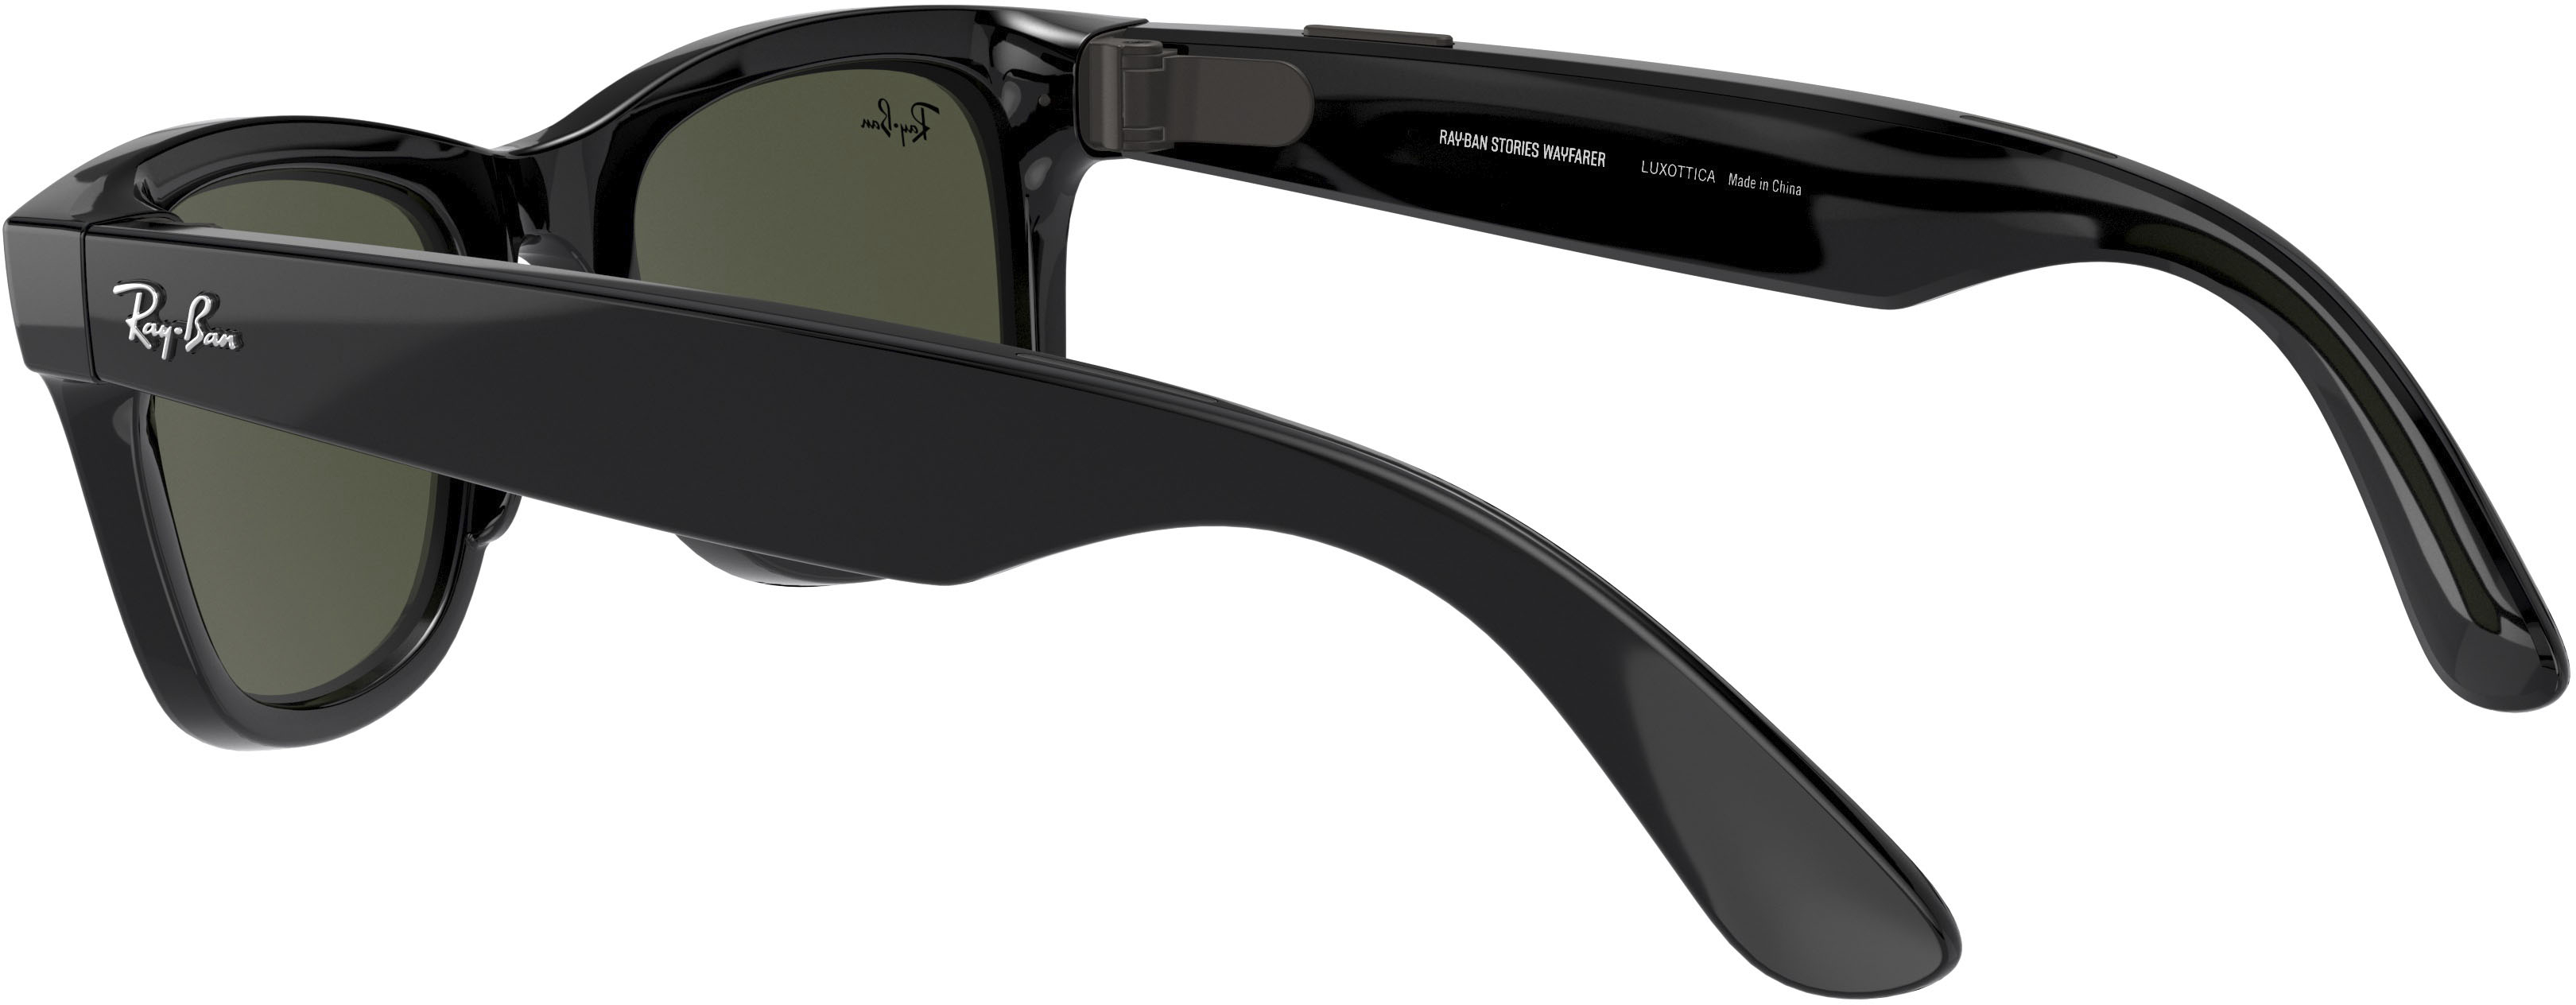 Ray-Ban - Stories Wayfarer Smart Glasses 50mm - Shiny Black/Green